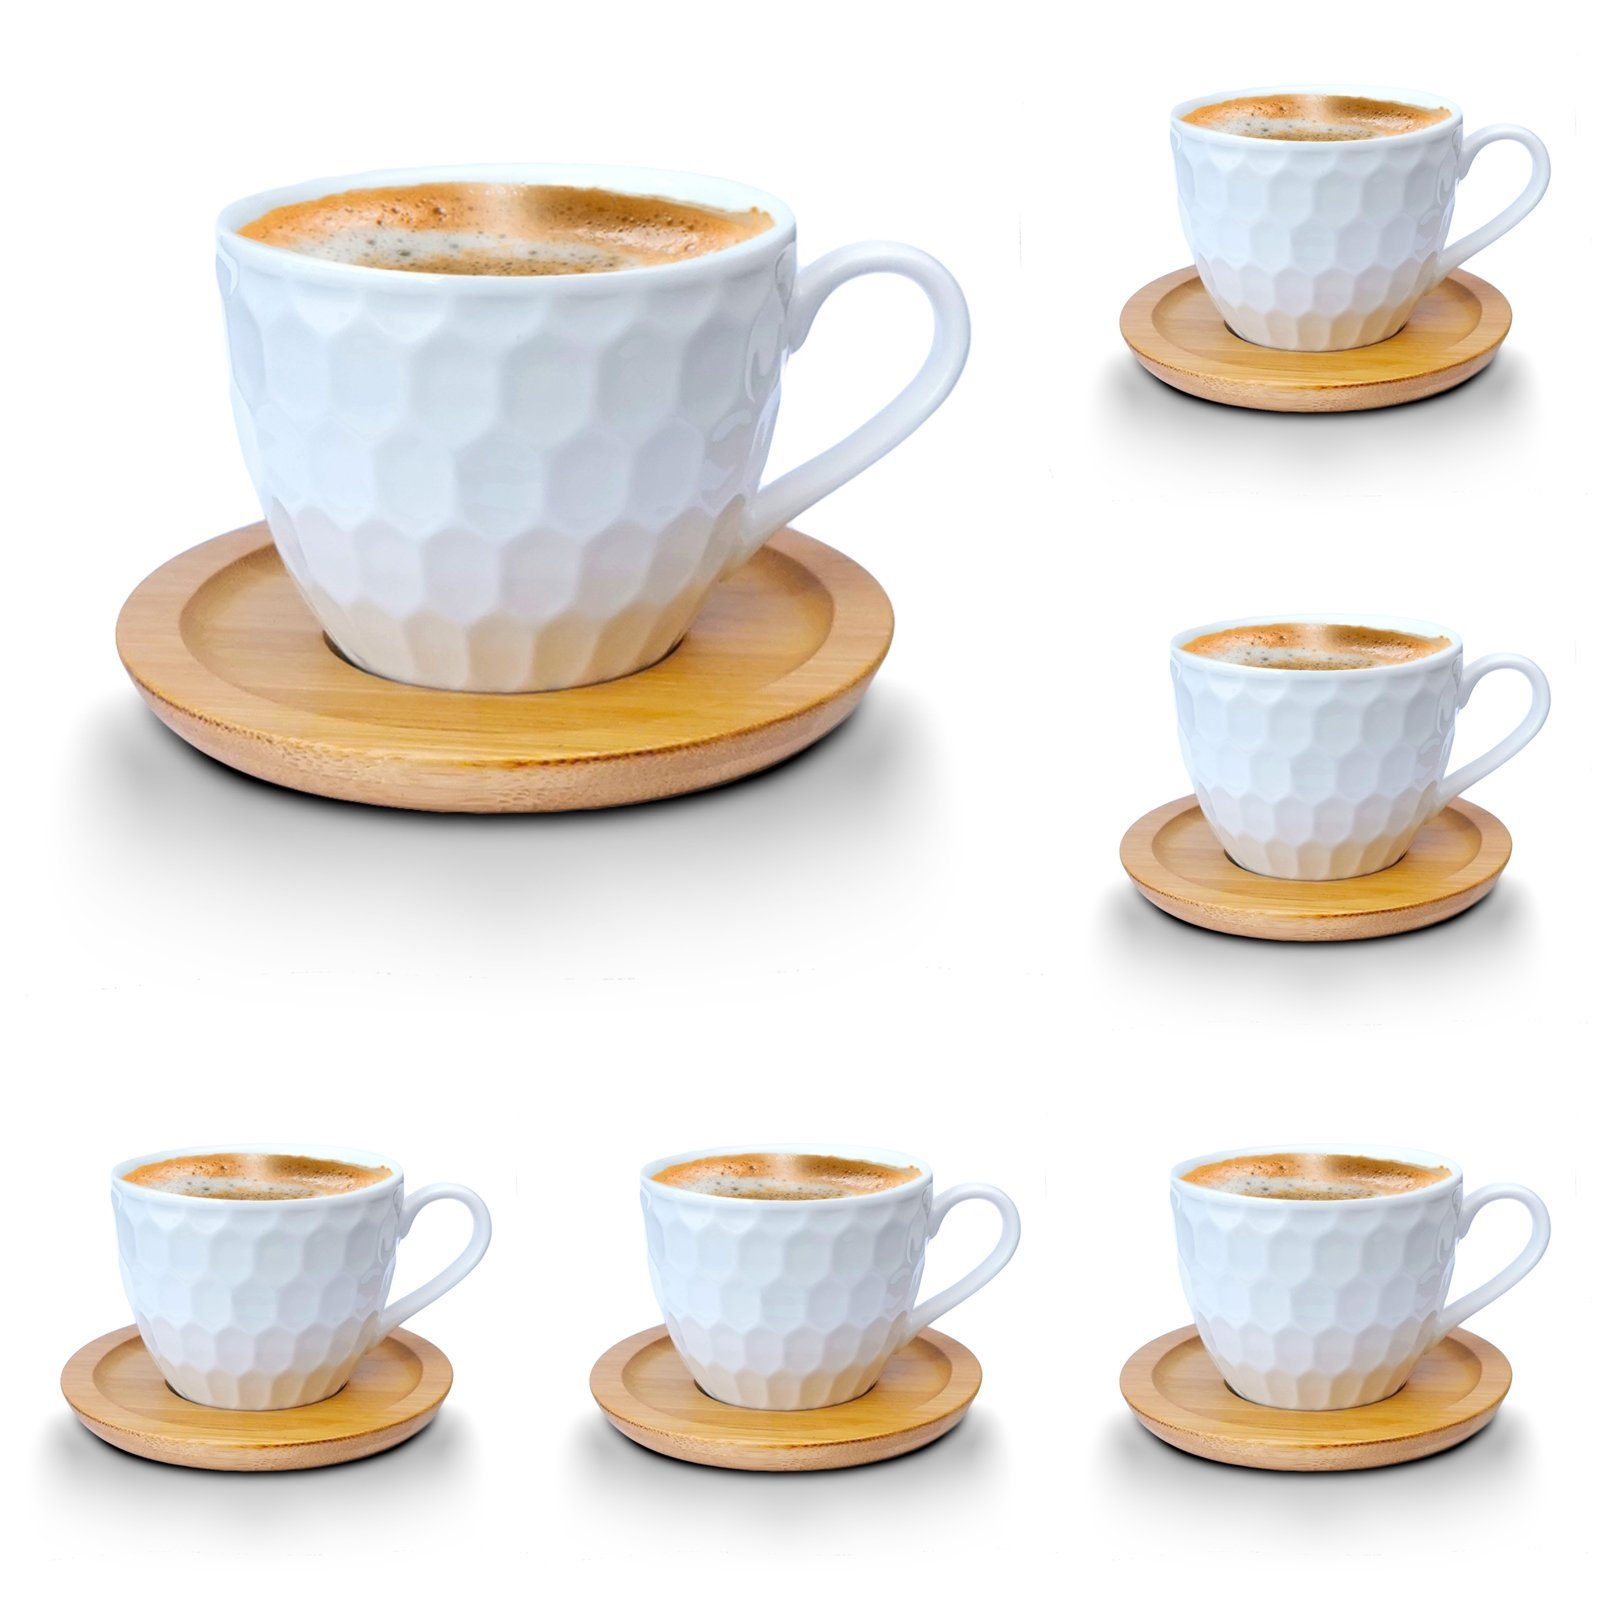 Melody Tasse Porzellan Чашки Set Teeservice Kaffeeservice mit Untertassen 12-Teilig, Porzellan, Espressotassen, 6er-Set, mit Untertassen